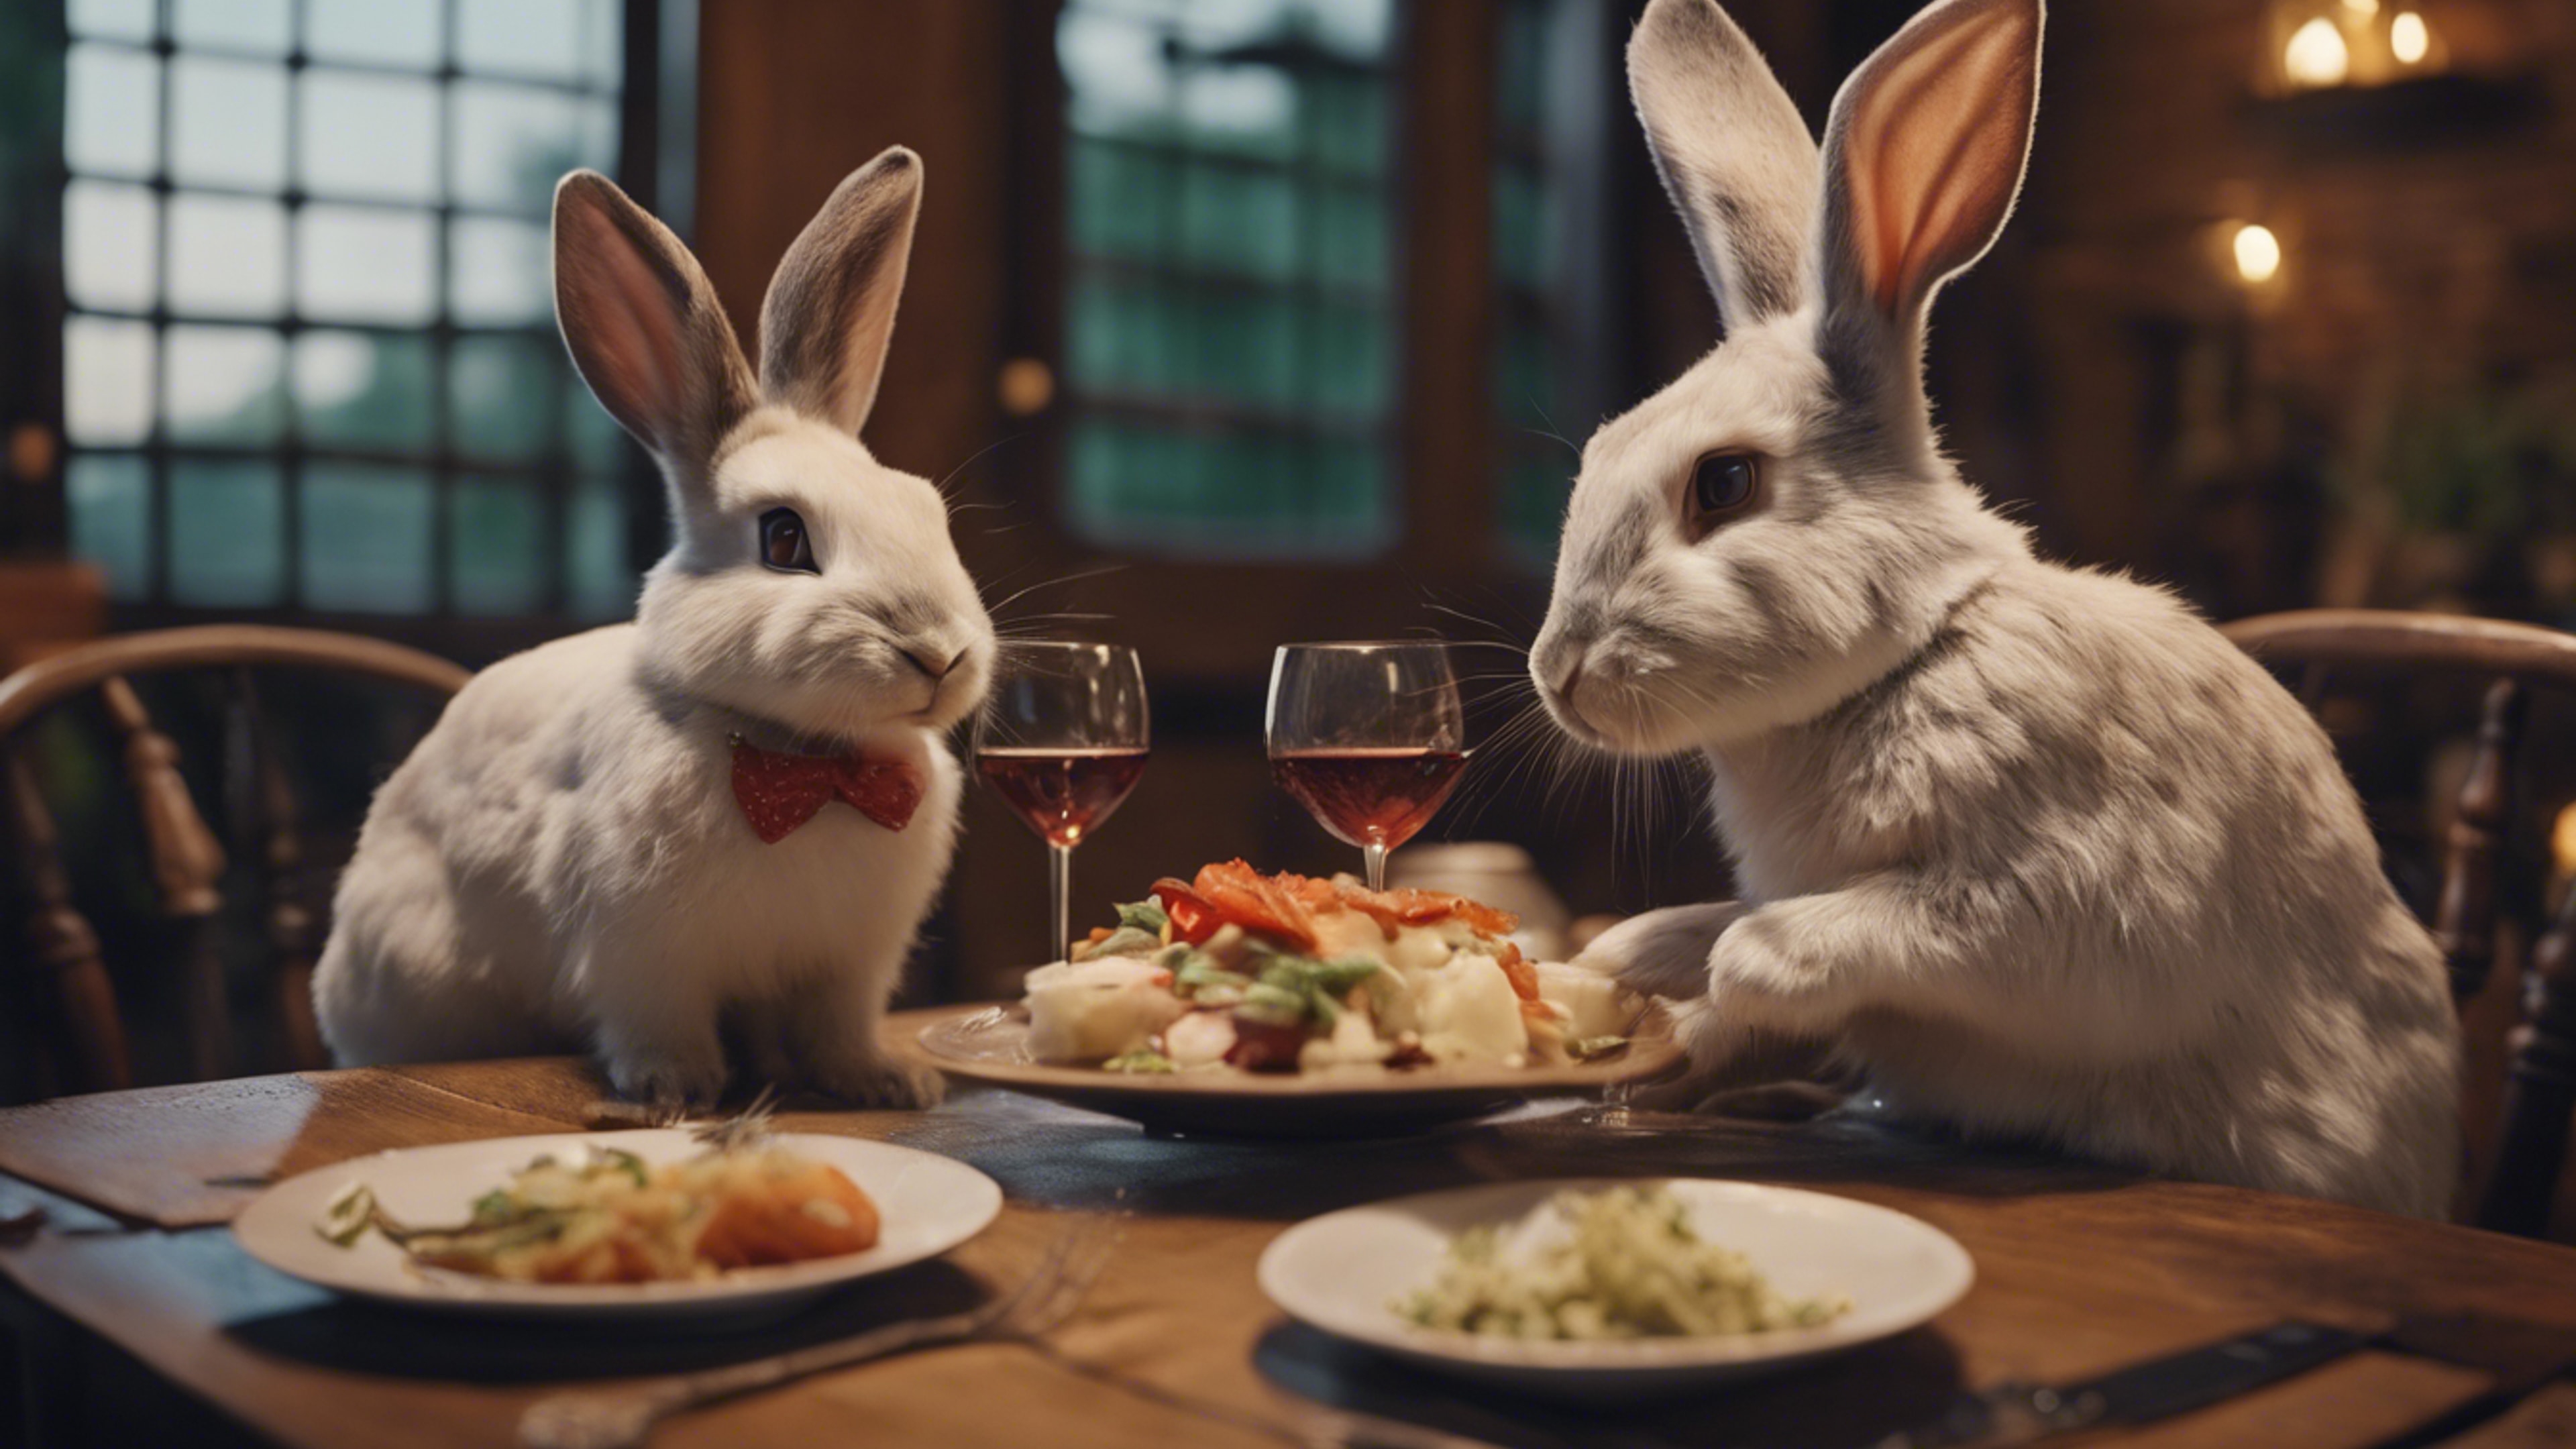 A rabbit couple enjoying a romantic dinner in a quaint, rustic setting. duvar kağıdı[f4a7594170784844a7a3]